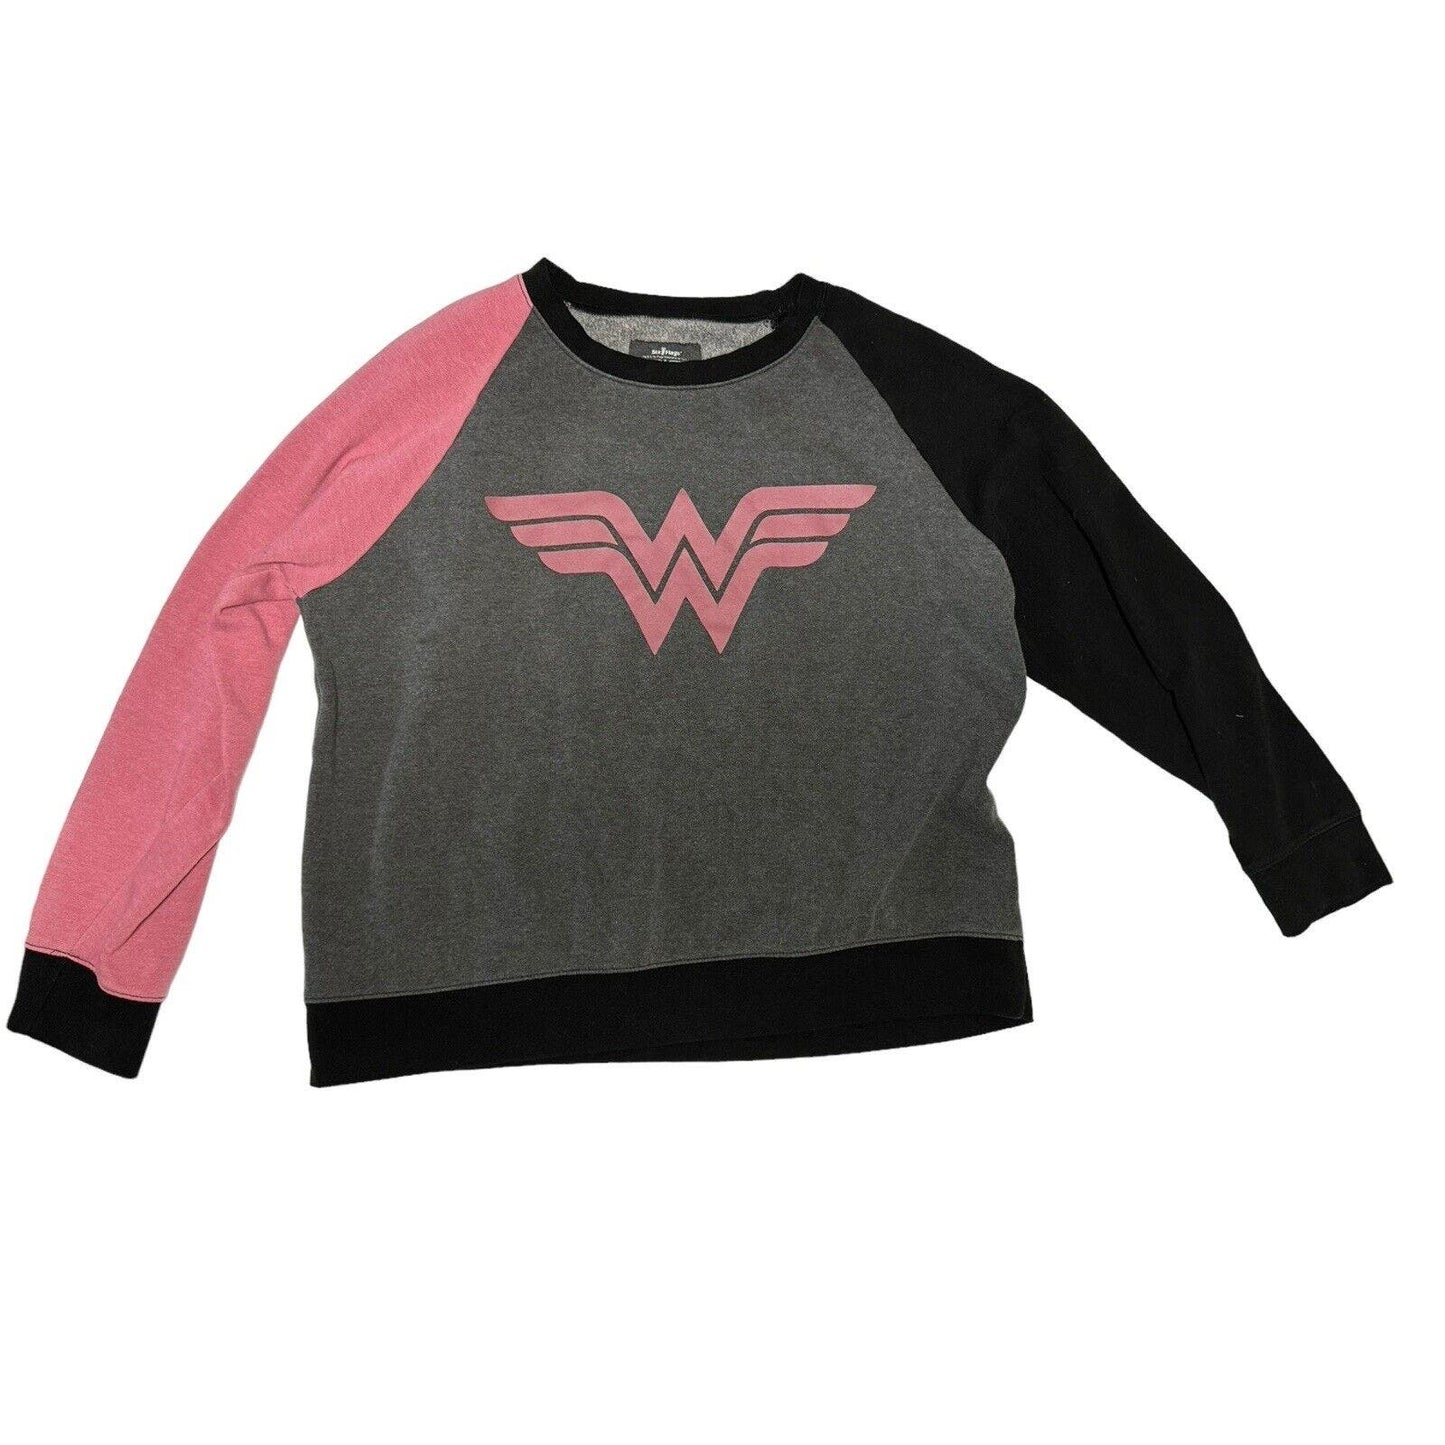 Six Flags Wonder Woman Pink Crew Neck Pullover Sweatshirt DC Comics Women’s XL